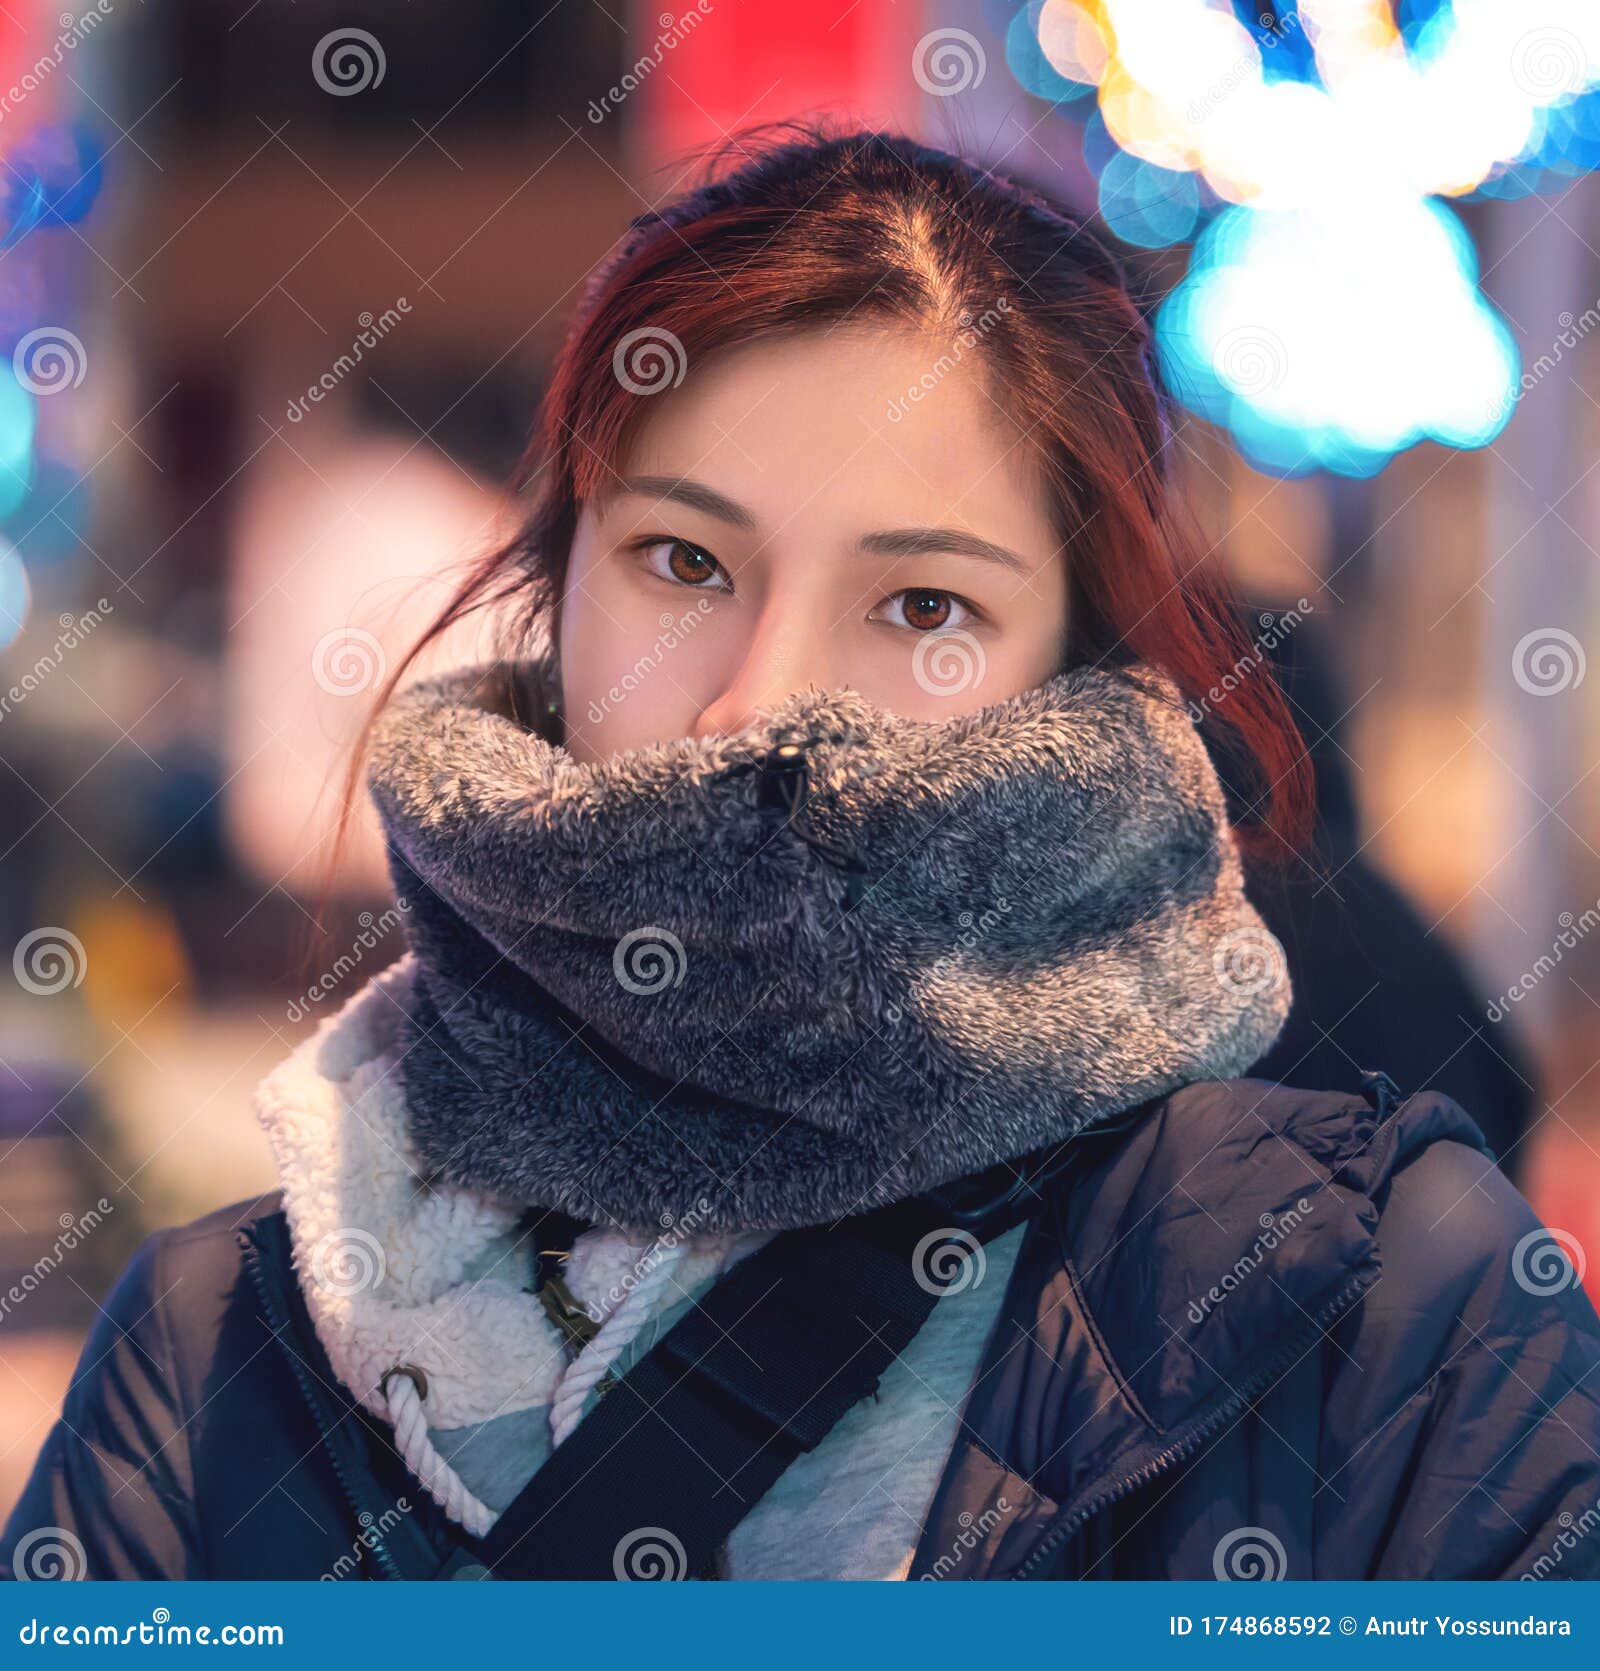 https://thumbs.dreamstime.com/z/portrait-red-hair-woman-walking-busy-street-sendai-japan-beauty-winter-fashion-concept-portrait-red-hair-174868592.jpg